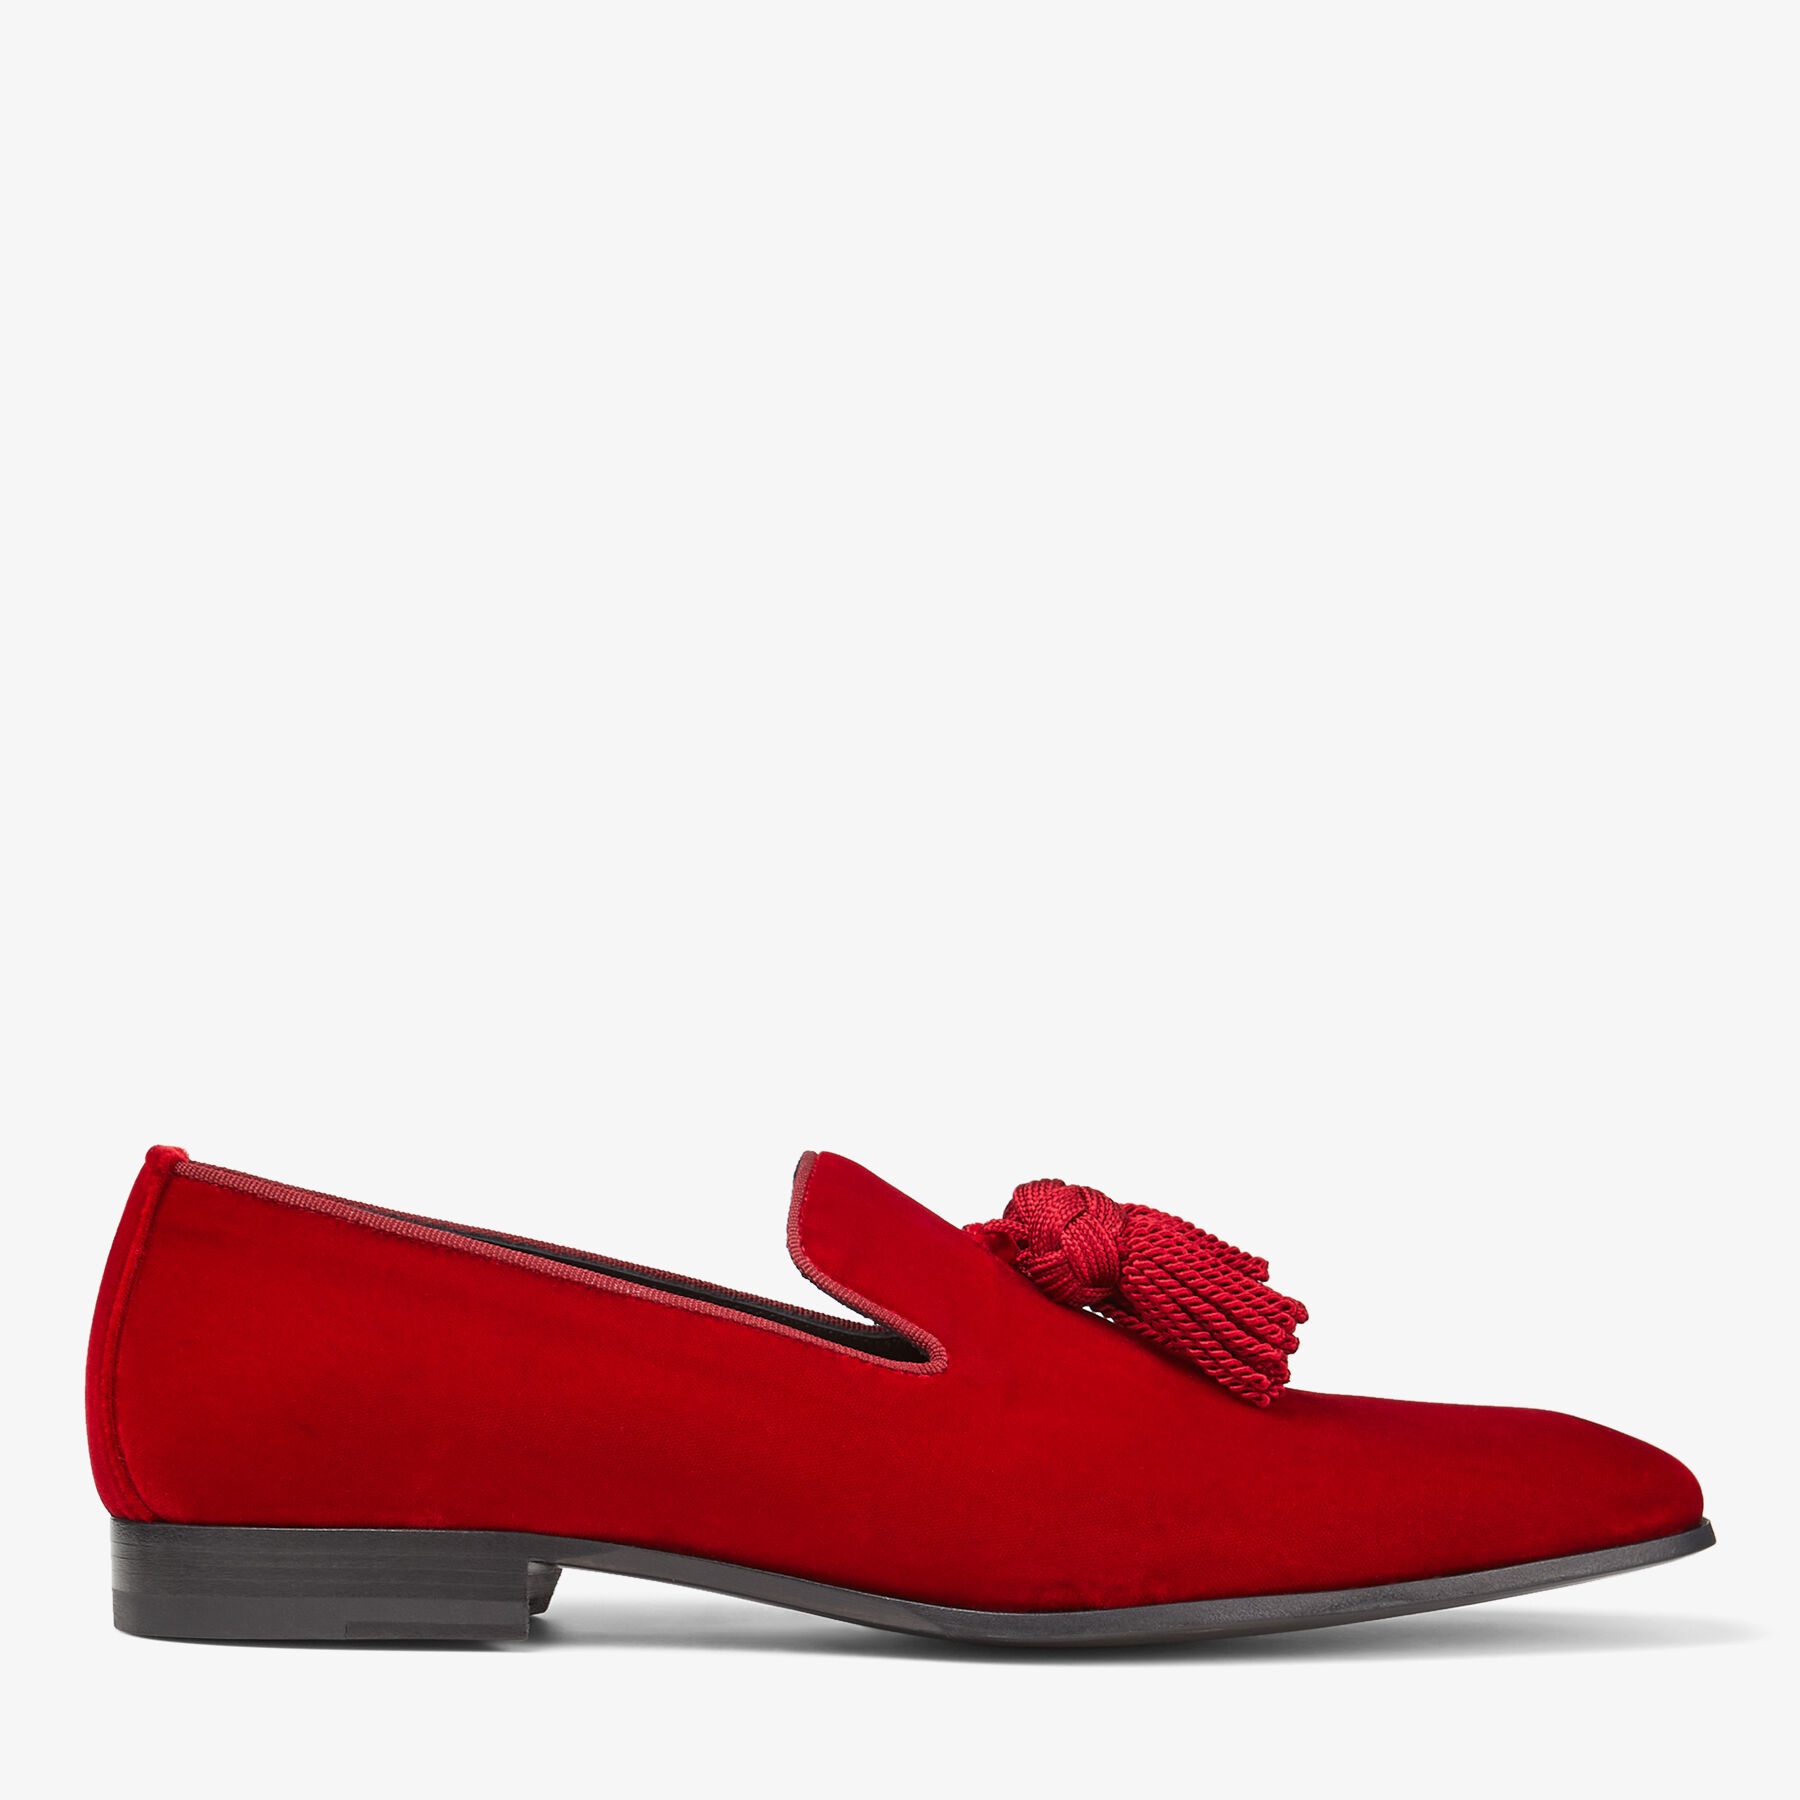 Foxley/M
Red Velvet Slip-On Shoes with Tassel - 1